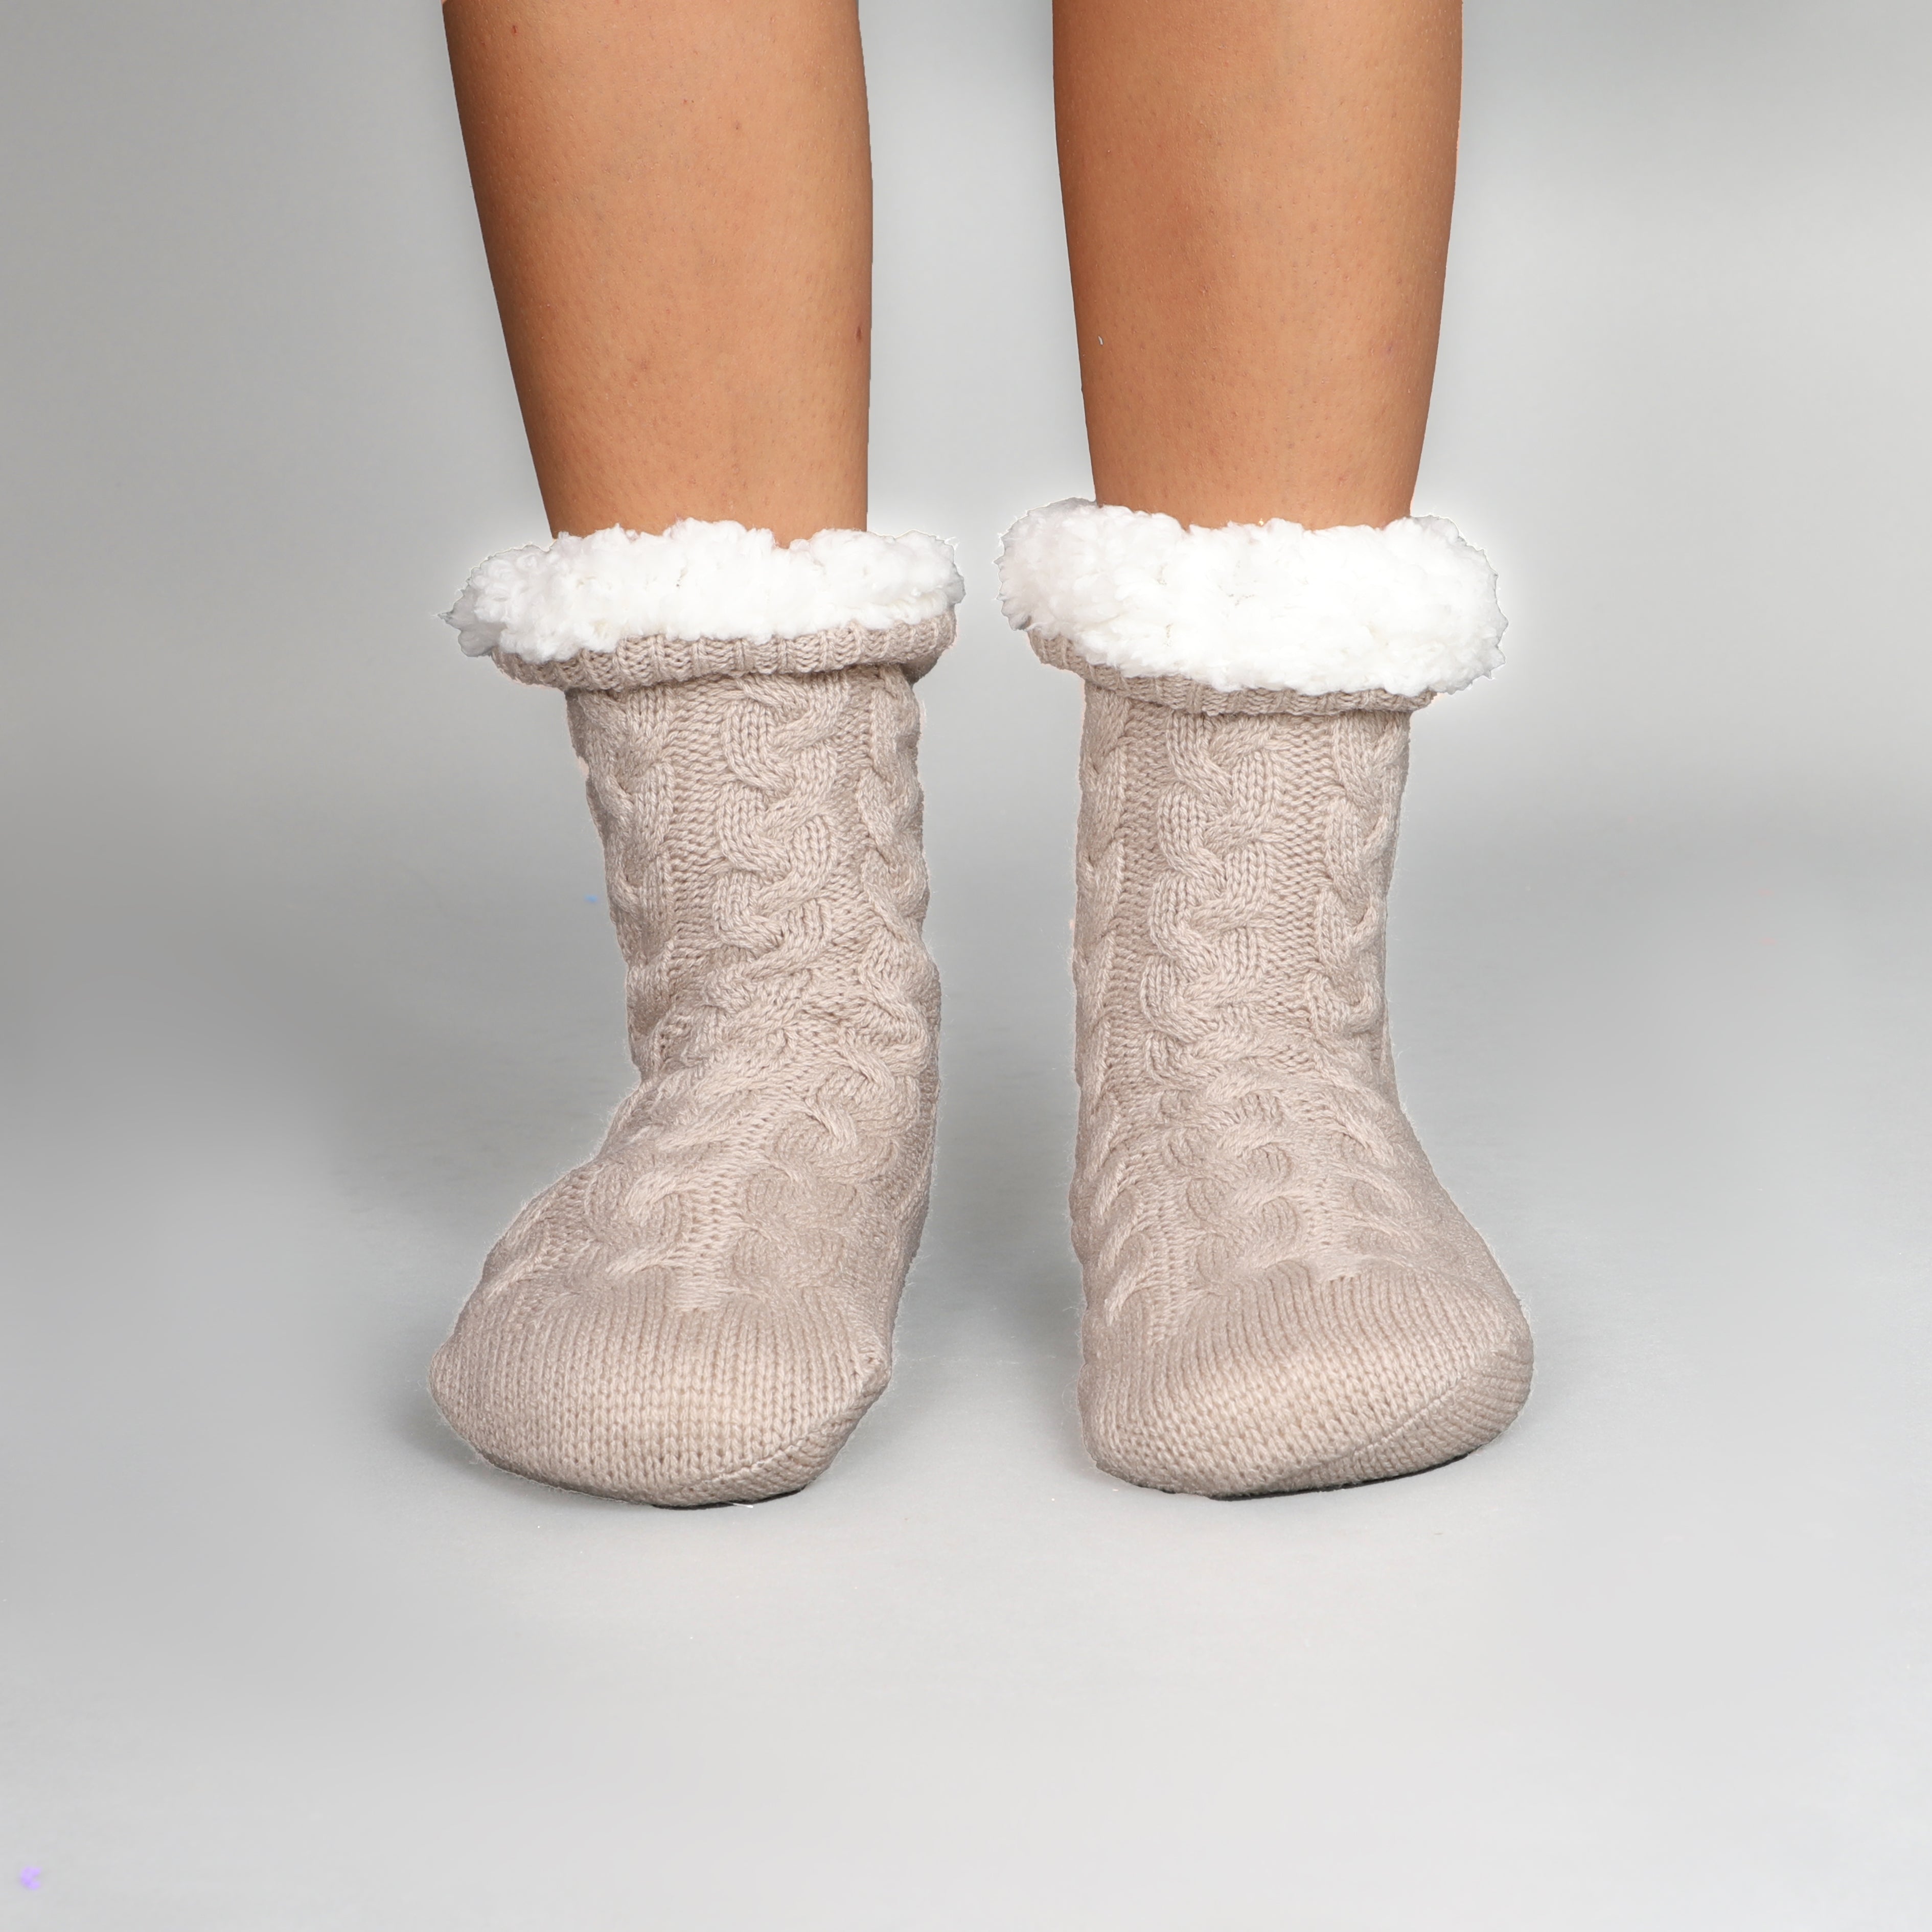 The Polar Socks